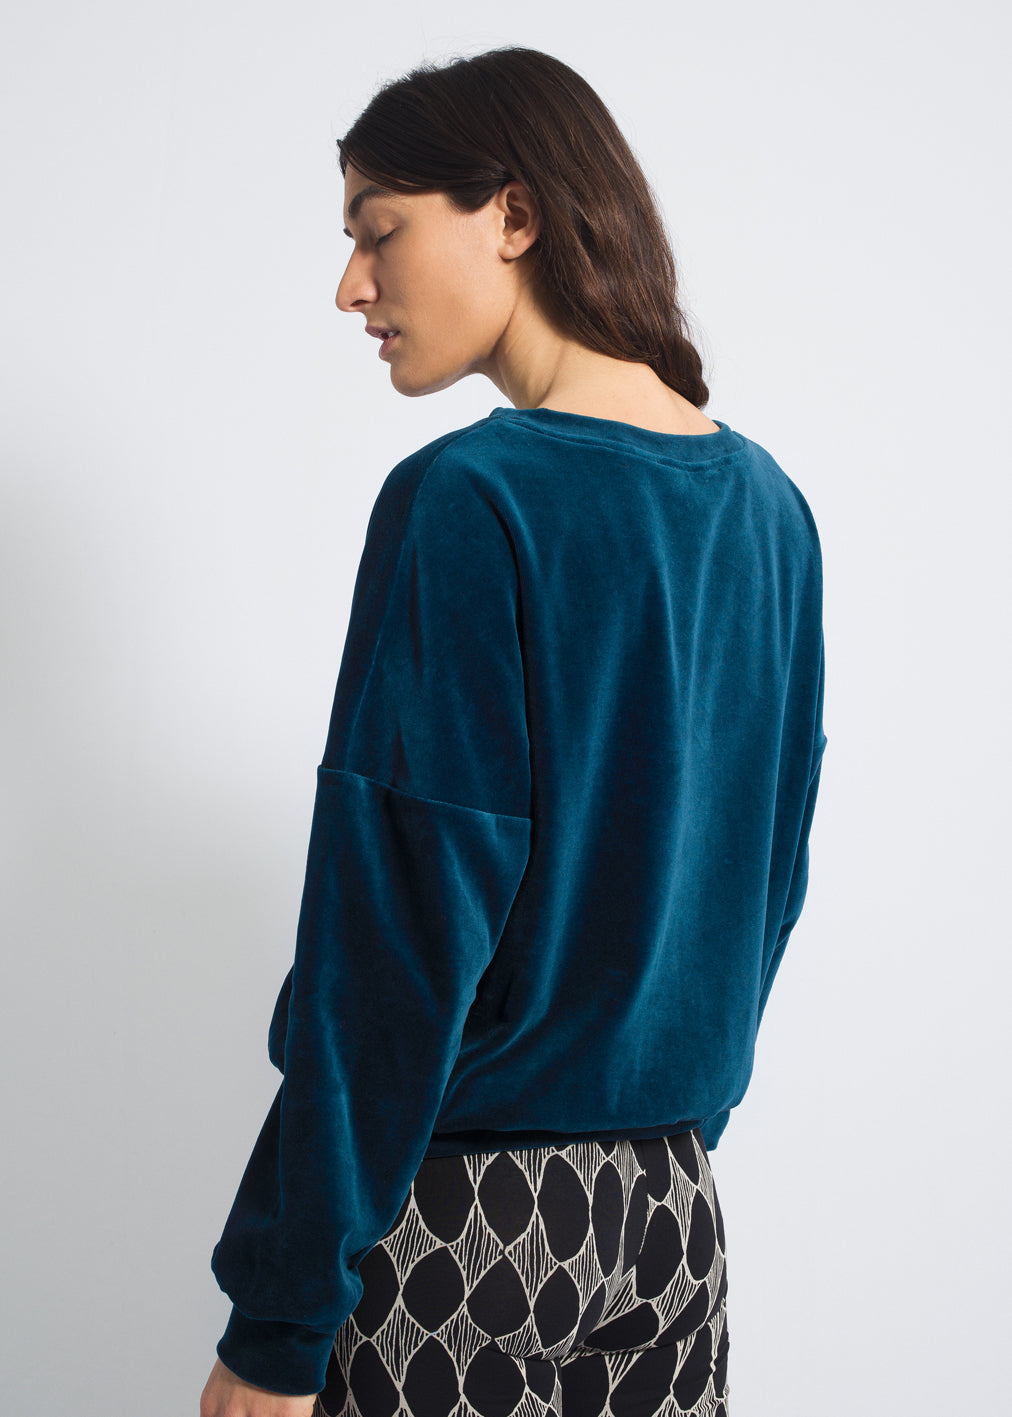 Samt Sweater in dunklem blau